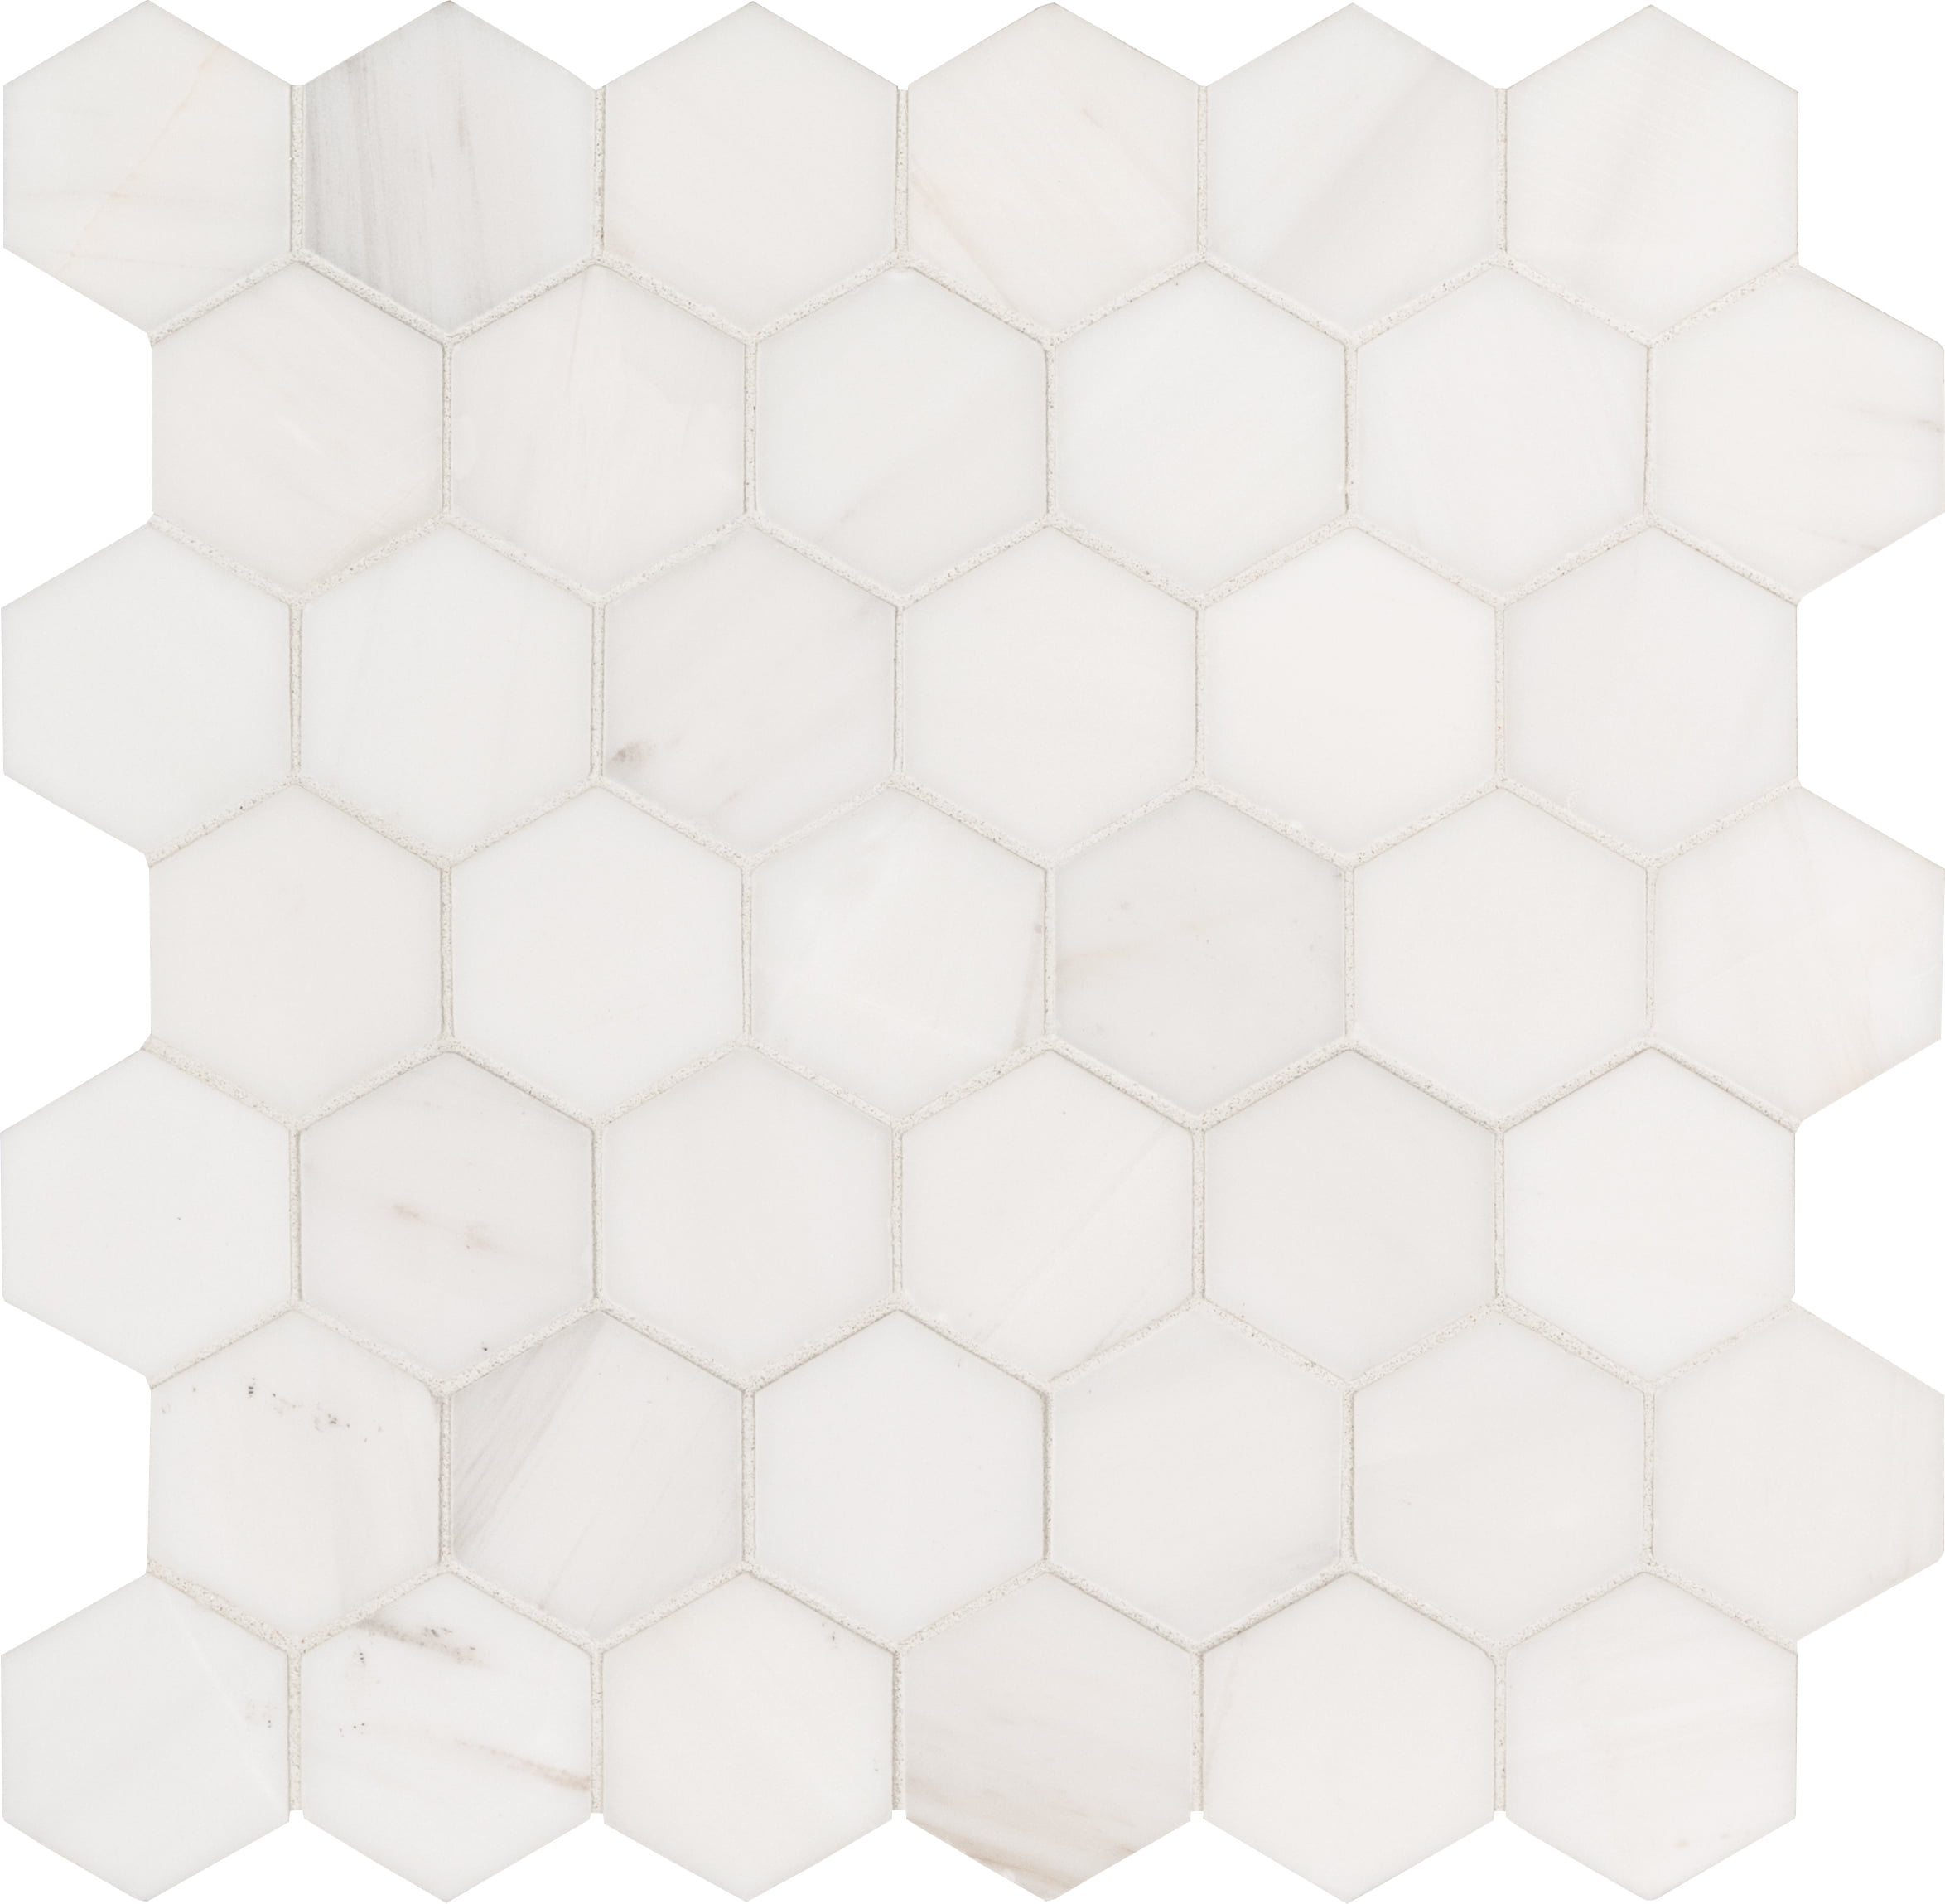 Jigsaw 19 Piece Hexagonal Mosaic Puzzle 'Marbles' Design 